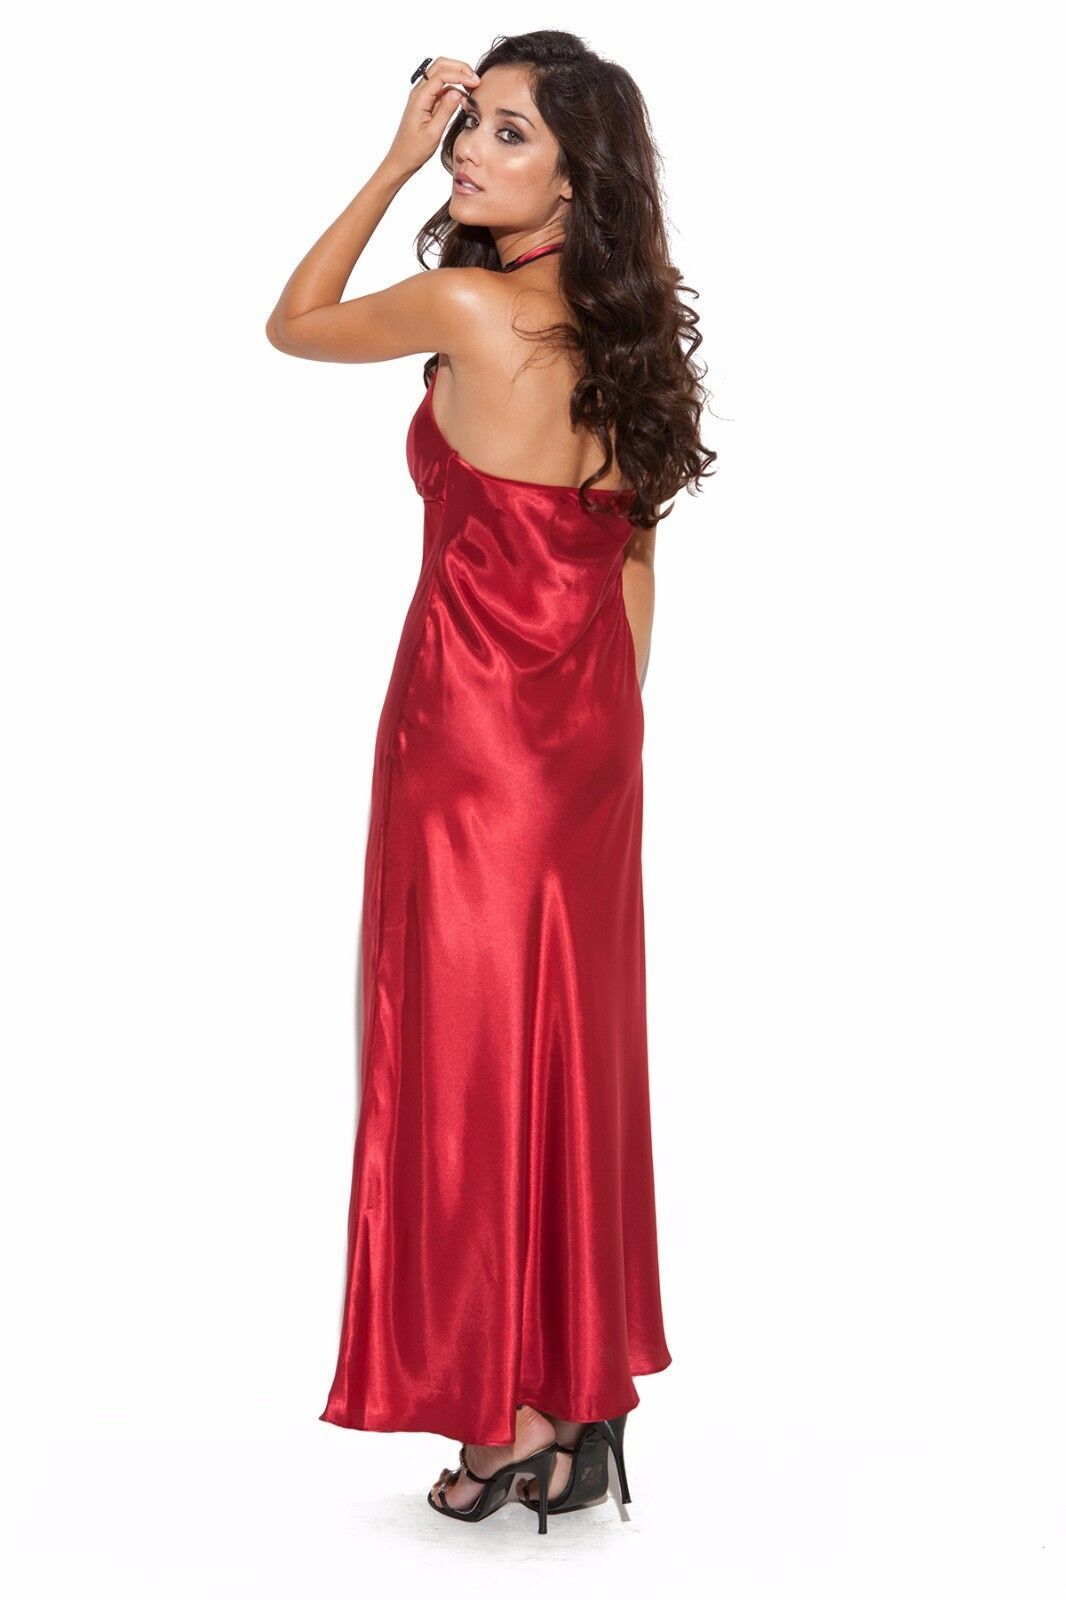 Satin Nightgown Full Length Halter Neck Long Gown Charmeuse Lingerie ...